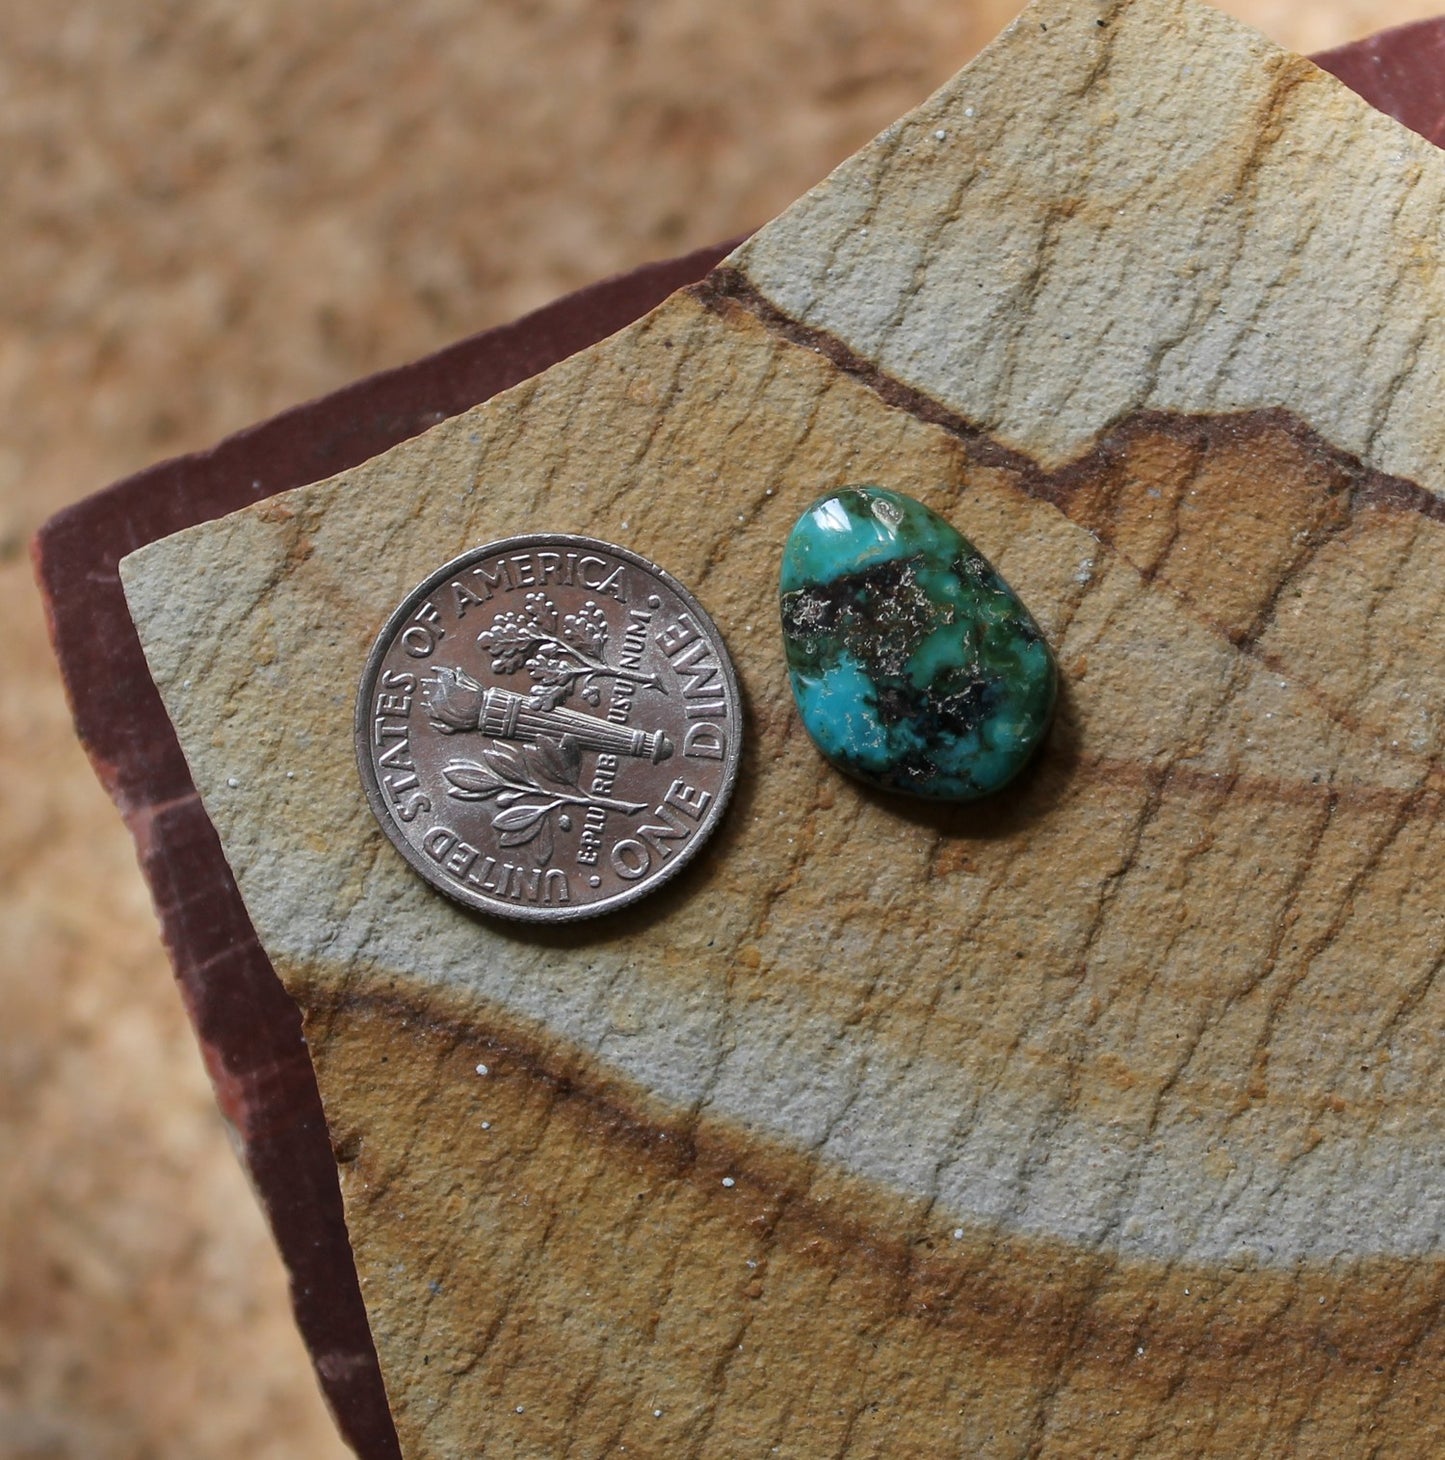 5.8 carat natural McGinnis turquoise cabochon with dark matrix